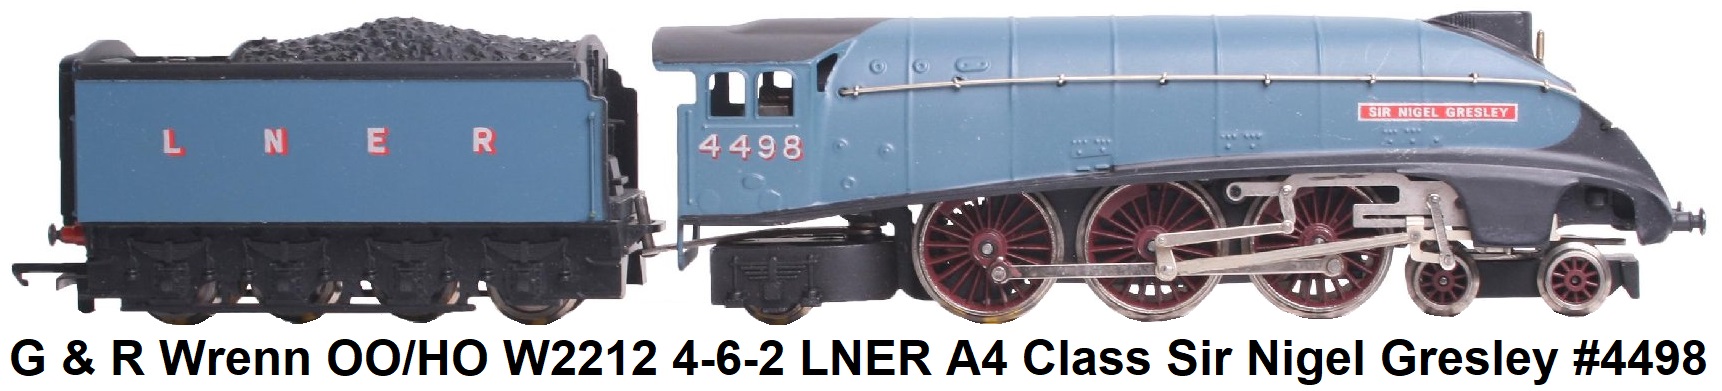 G & R Wrenn Railways OO/HO gauge W2212 4-6-2 LNER blue A4 Class Locomotive and Tender Sir Nigel Gresley